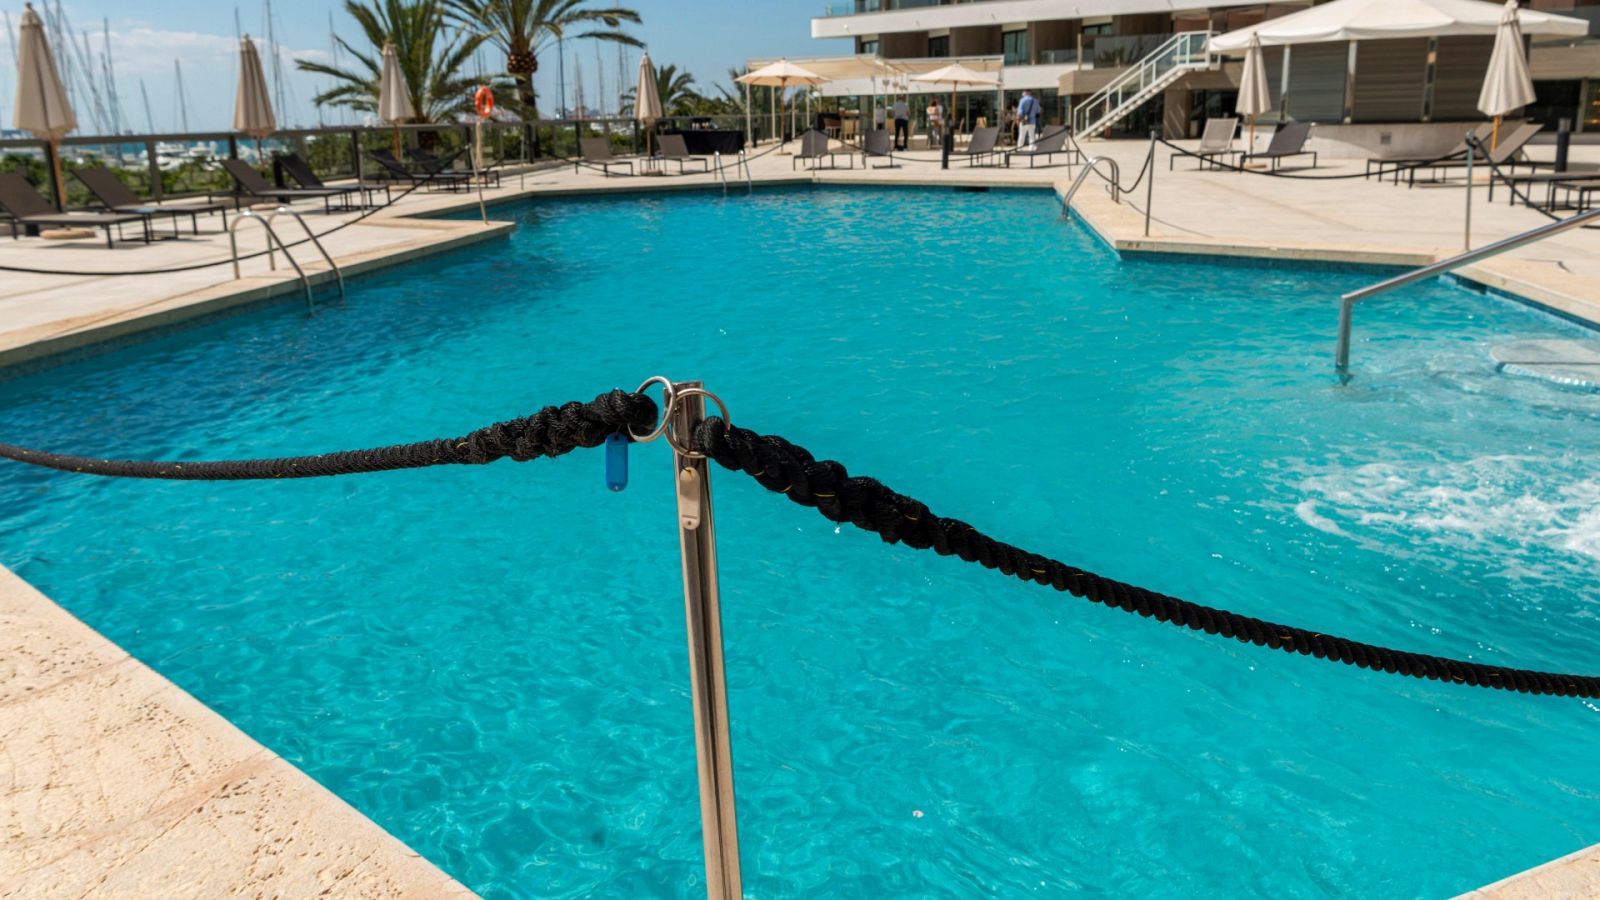 Las piscinas reabrirán para uso deportivo a partir de este lunes en toda España.